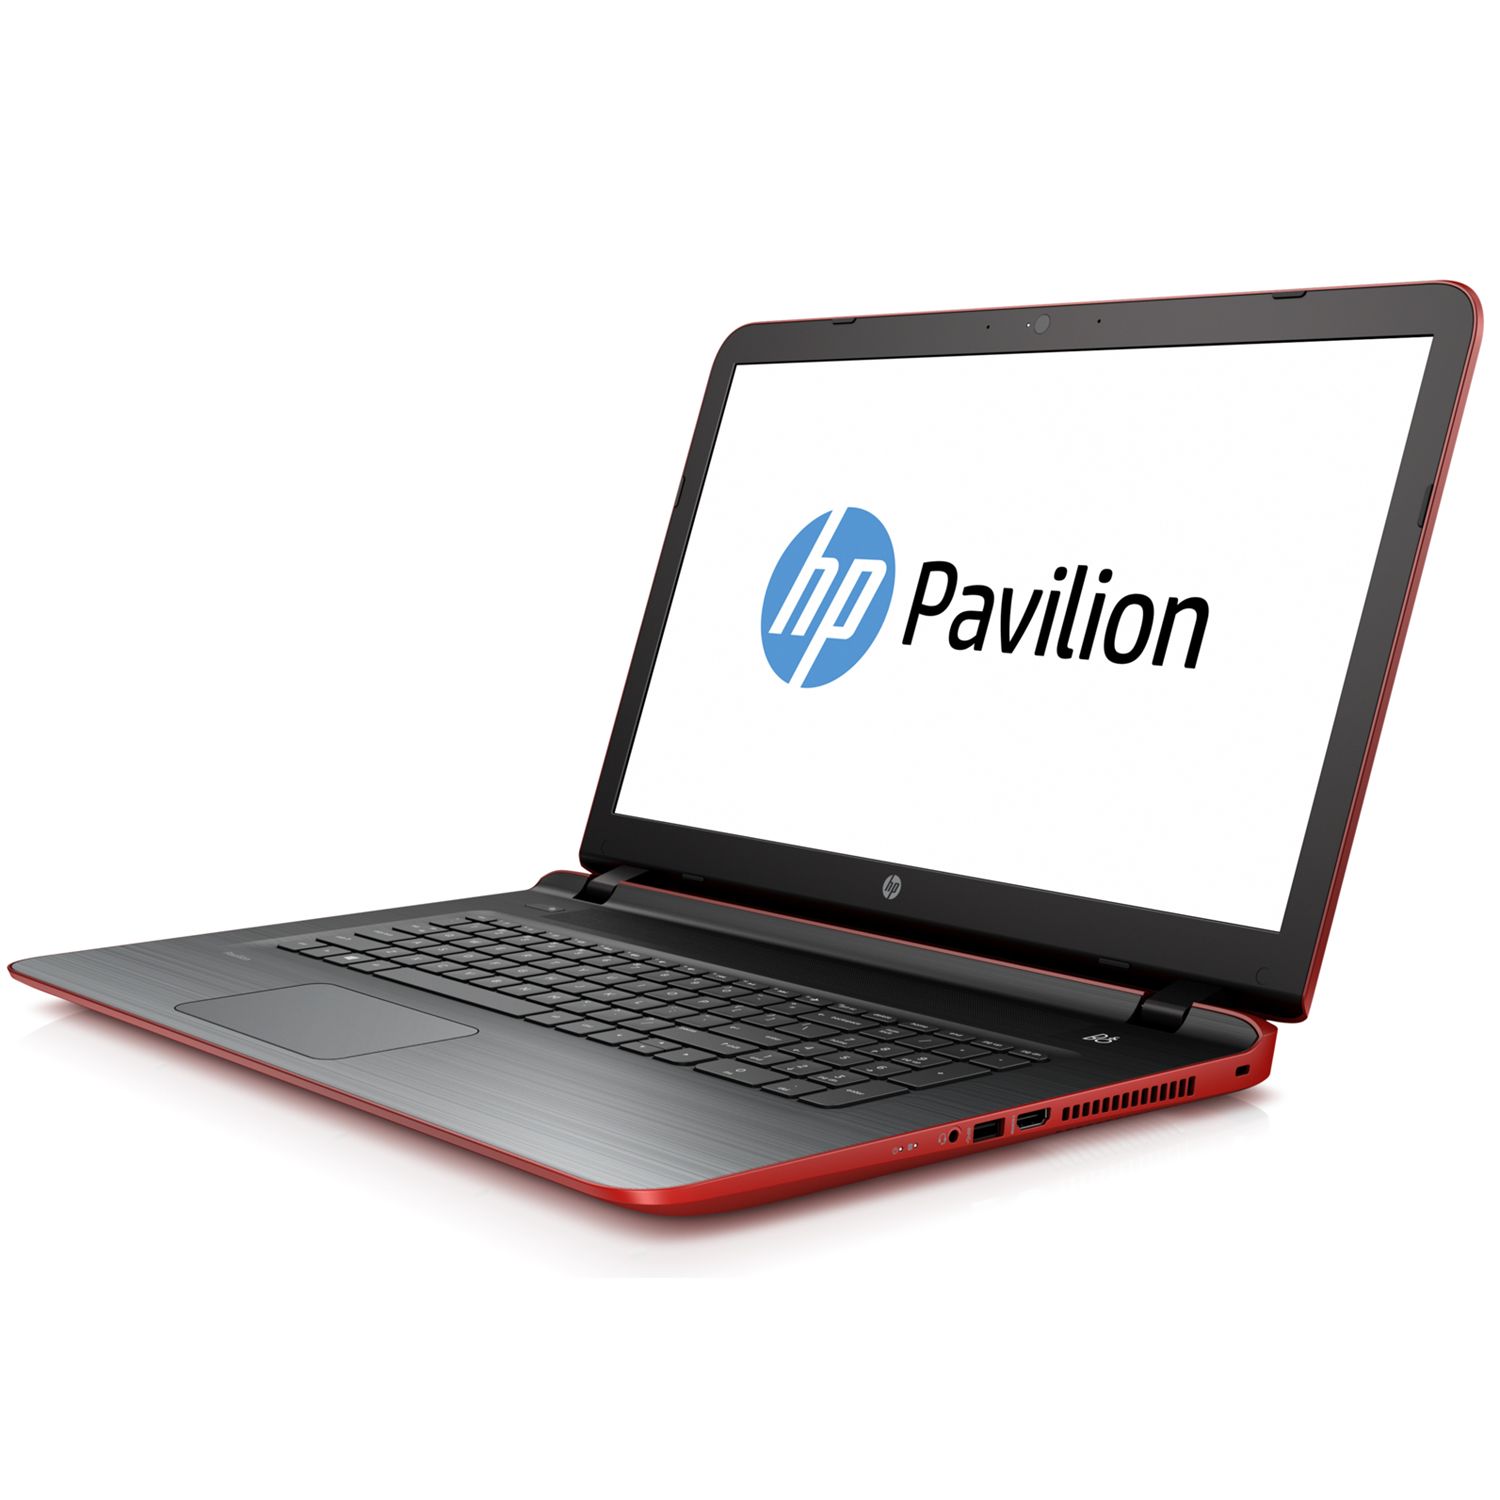 ketcher Mundtlig Arbejdsløs HP Pavilion 17-g135na Laptop, Intel Core i5, 8GB RAM, 1TB, 17.3", Sunset Red